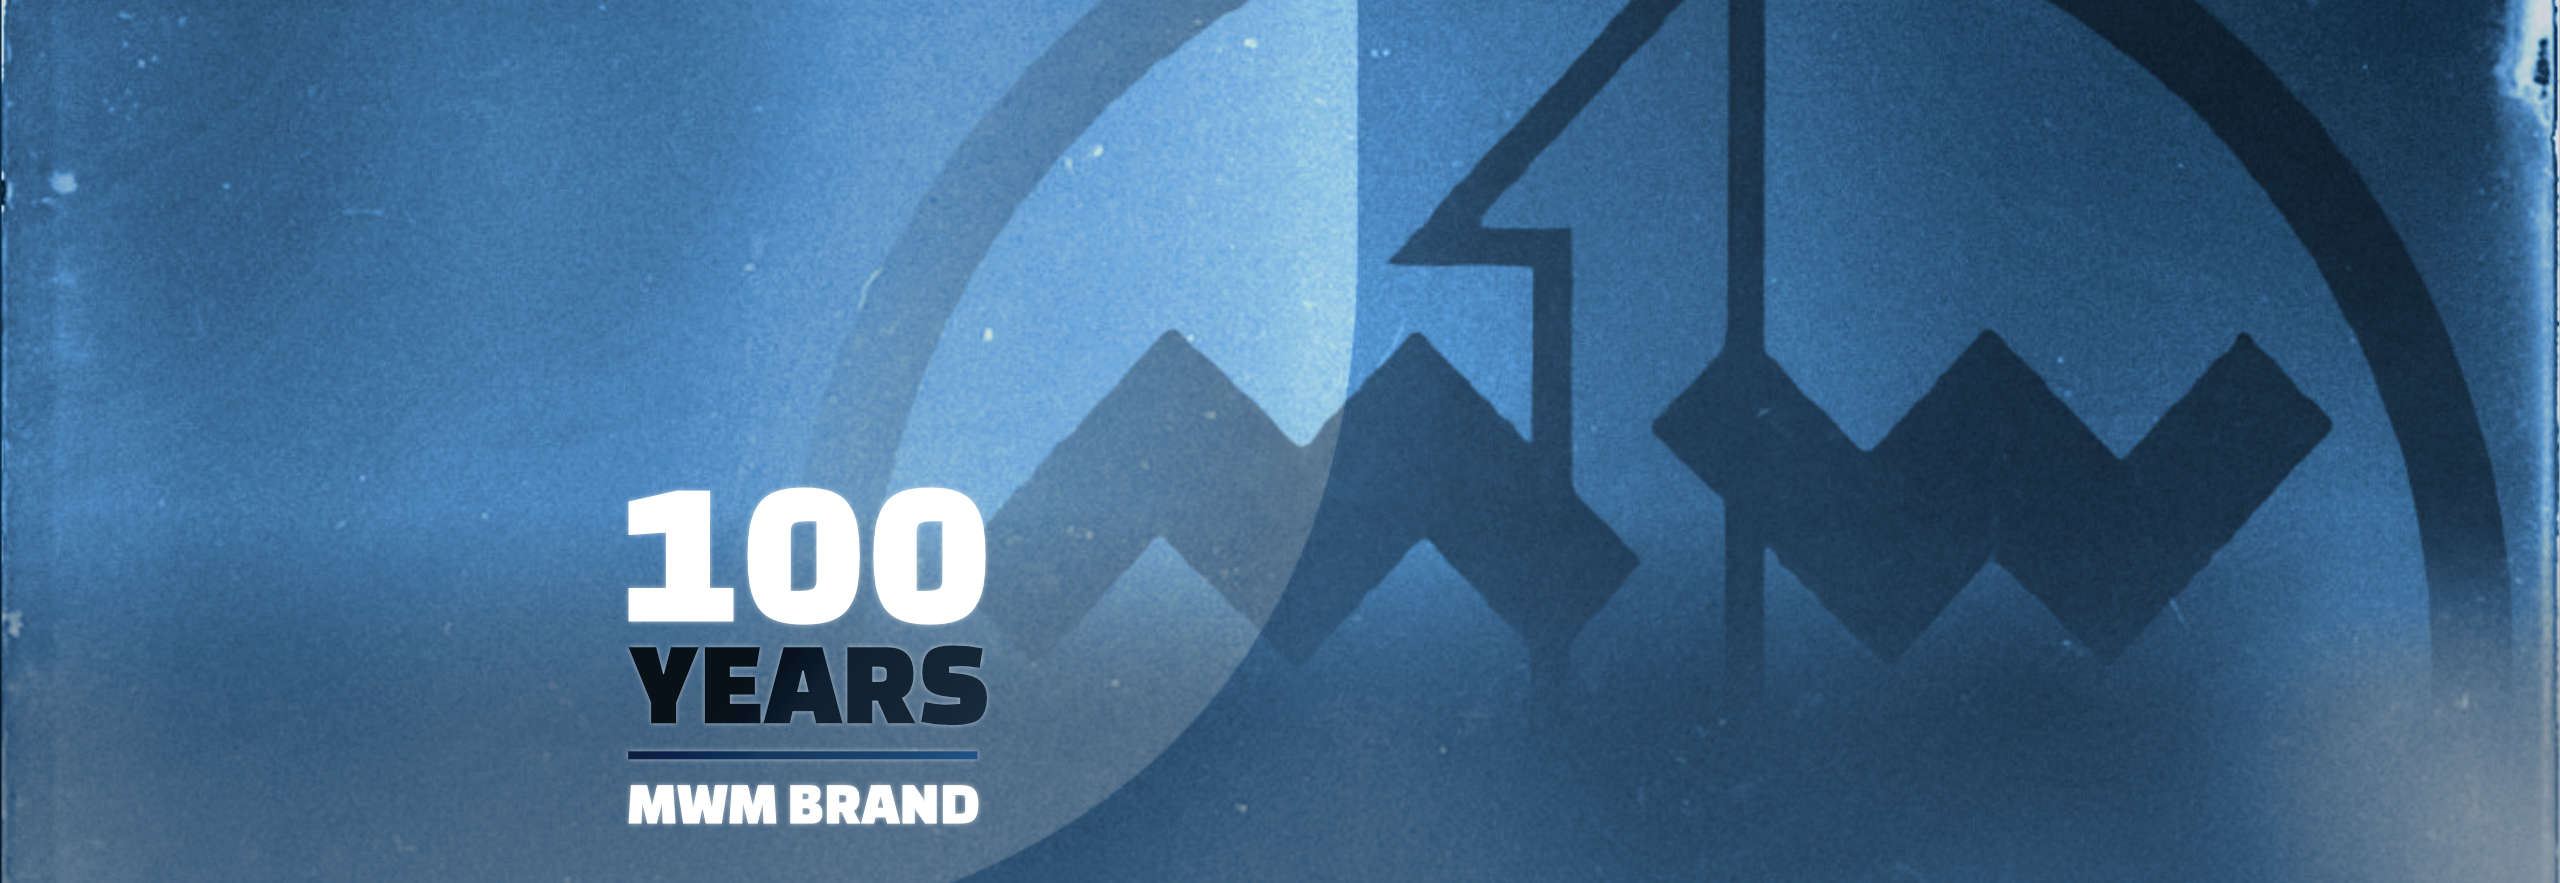 100 Years of the MWM Brand